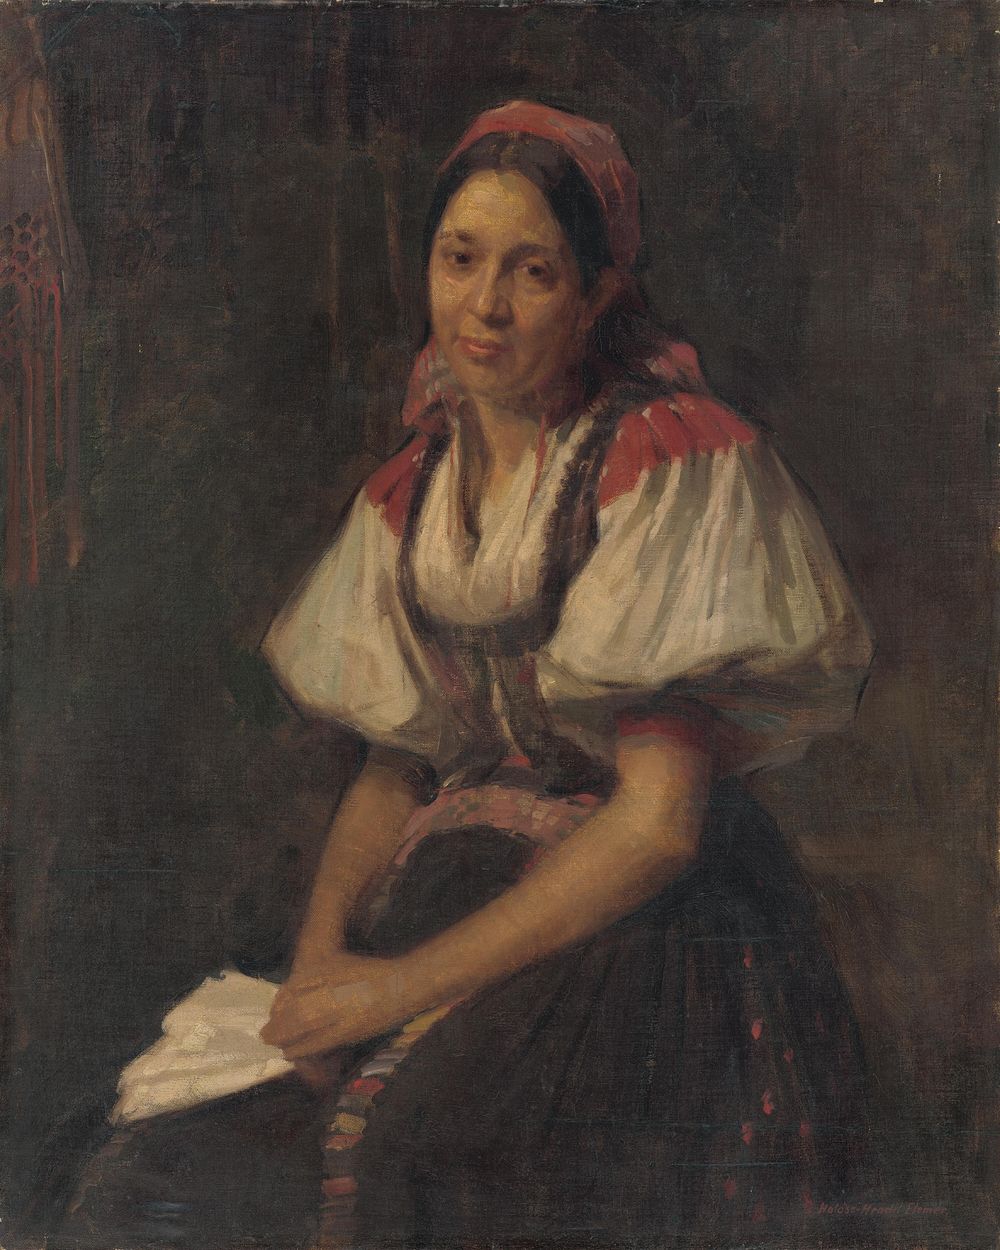 Peasant woman in folk costume